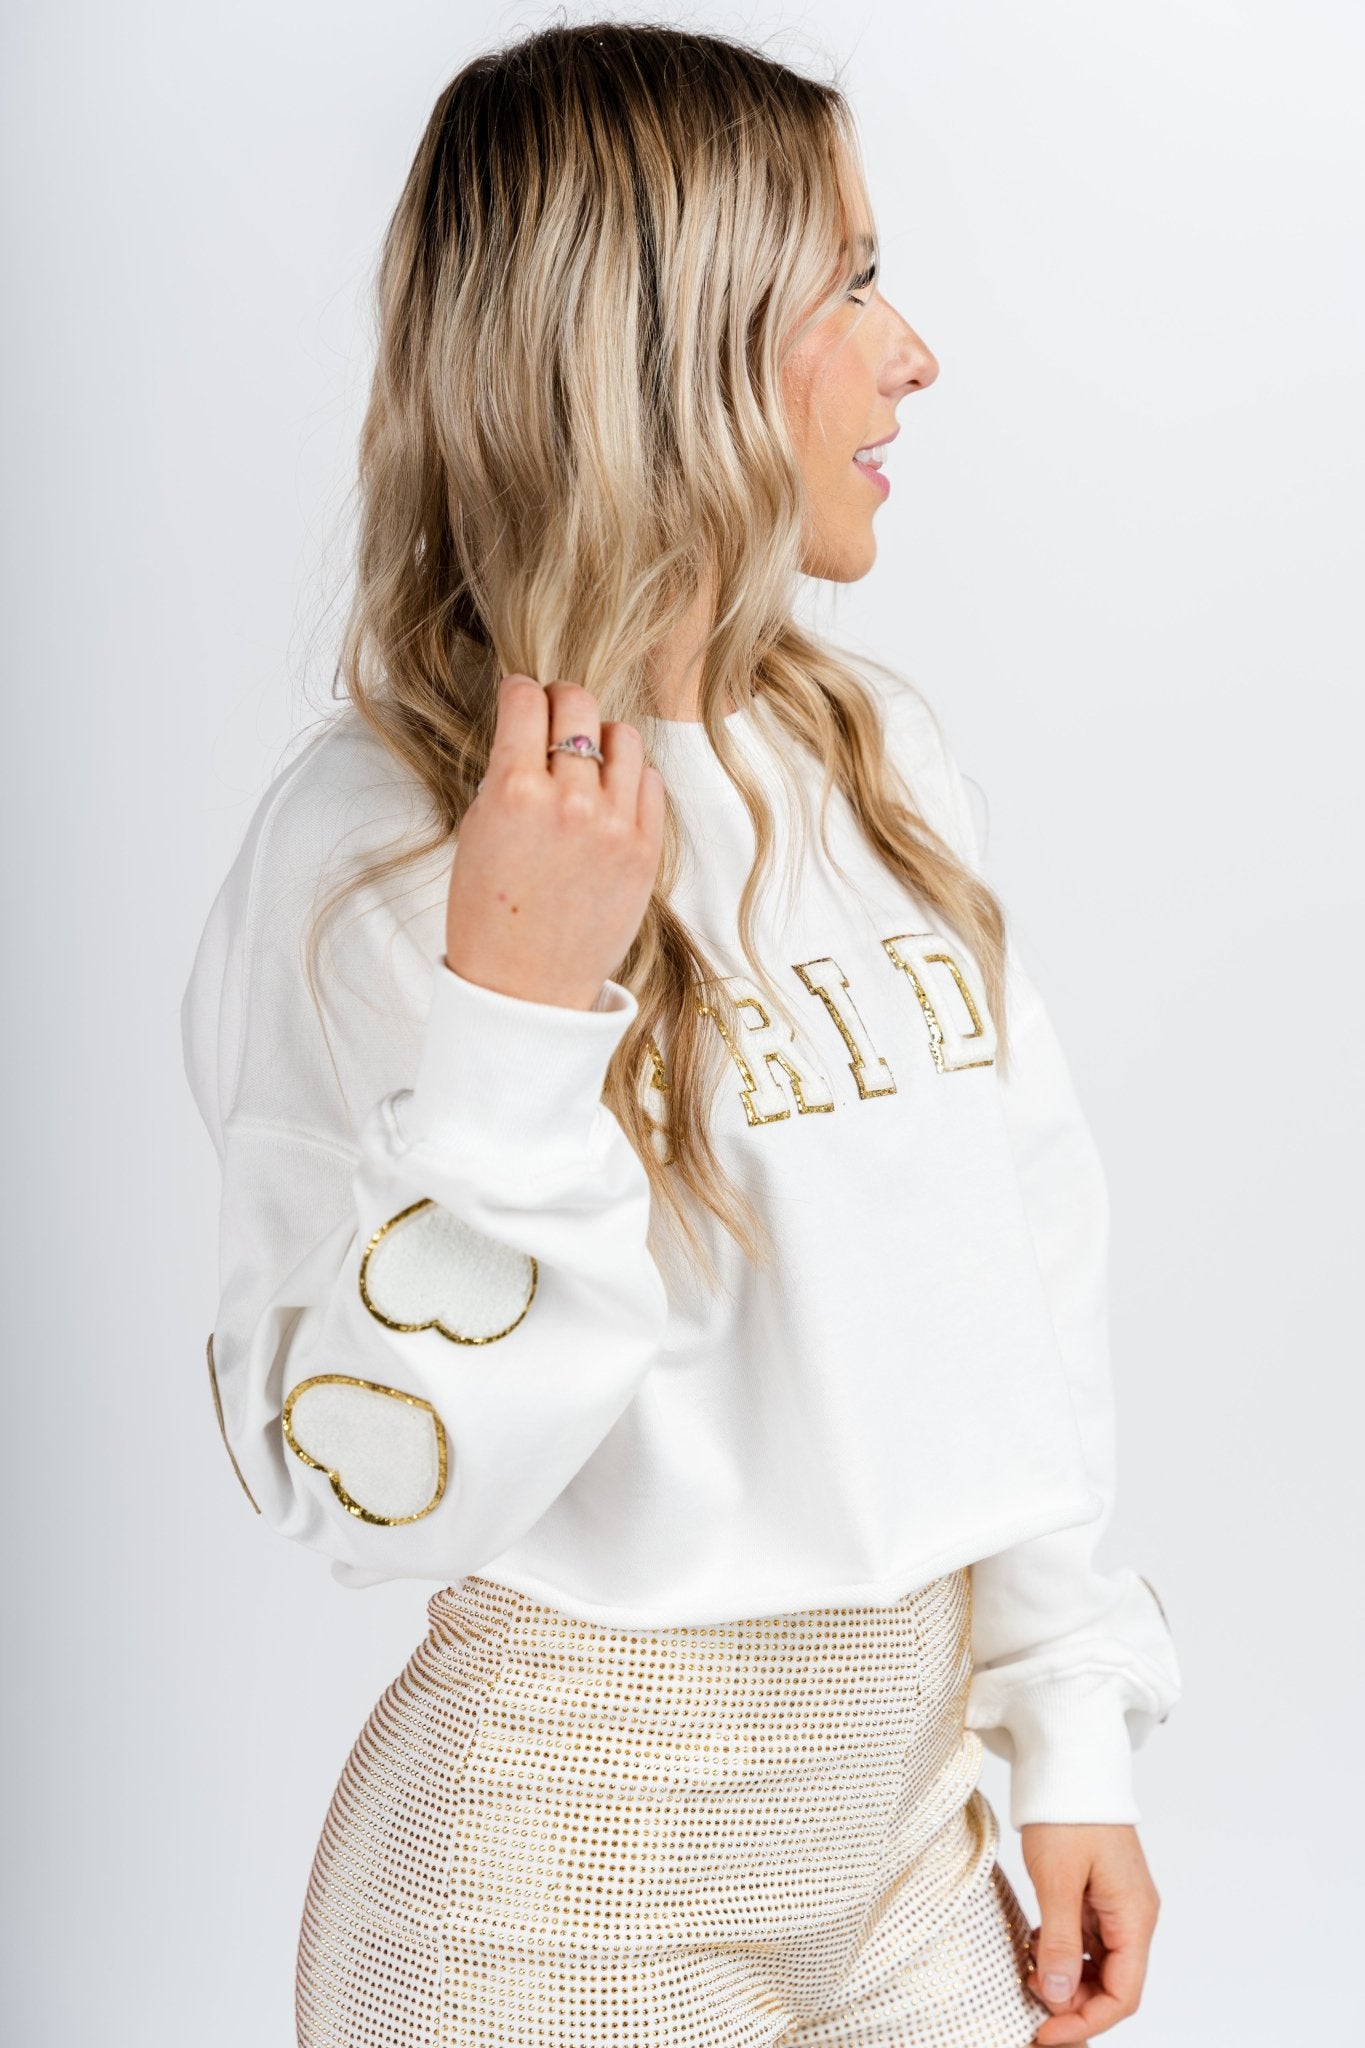 Bride patch crop sweatshirt ivory - Fun Sweatshirt - Stylish Bridal Graphic Tees at Lush Fashion Lounge Boutique in OKC